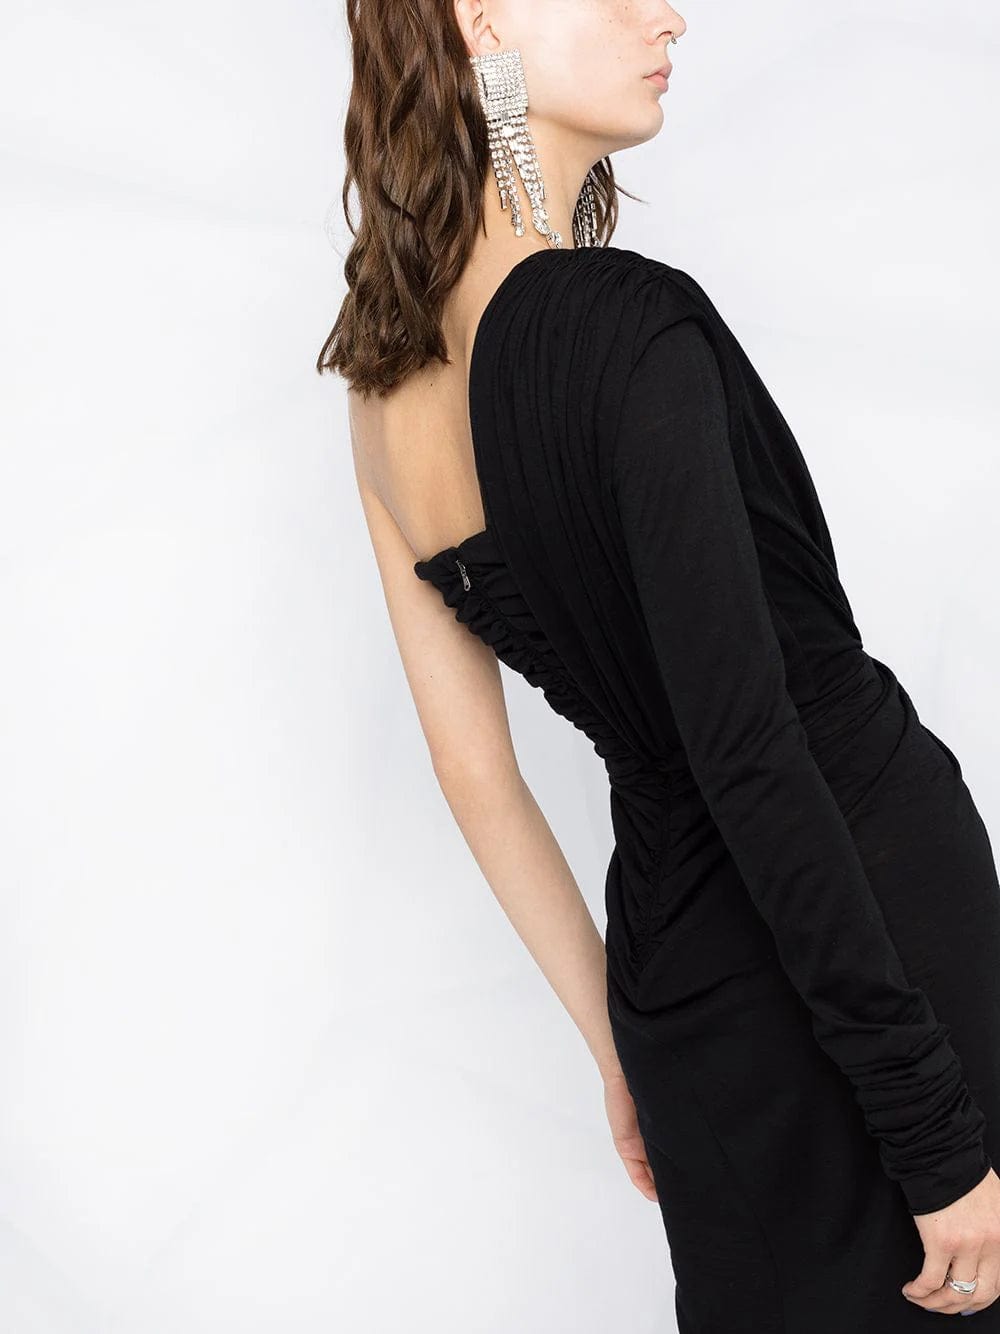 Dolce & Gabbana One-Shoulder Midi Dress